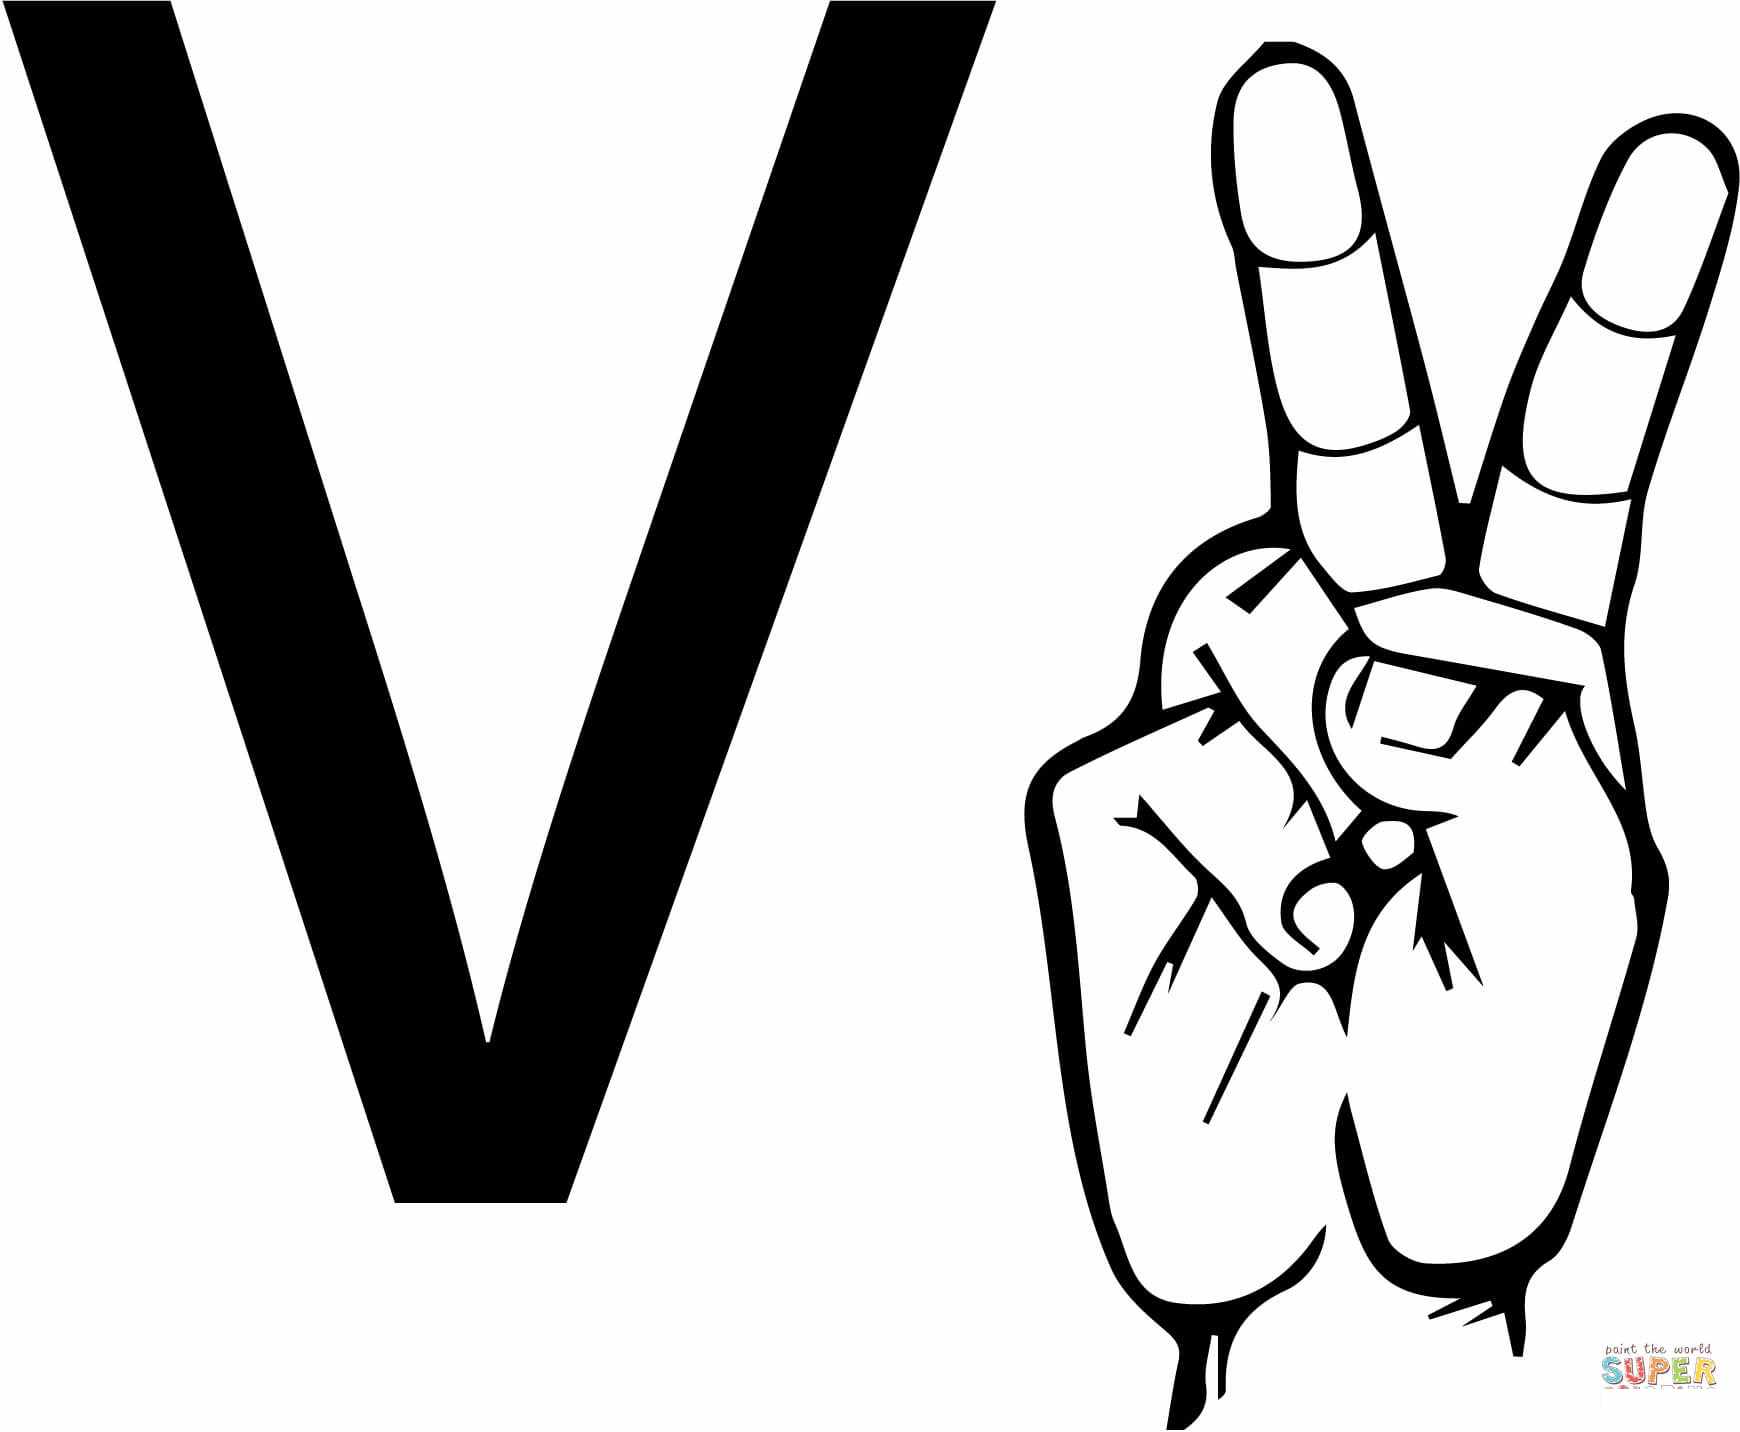 Буква V на языке жестов ASL